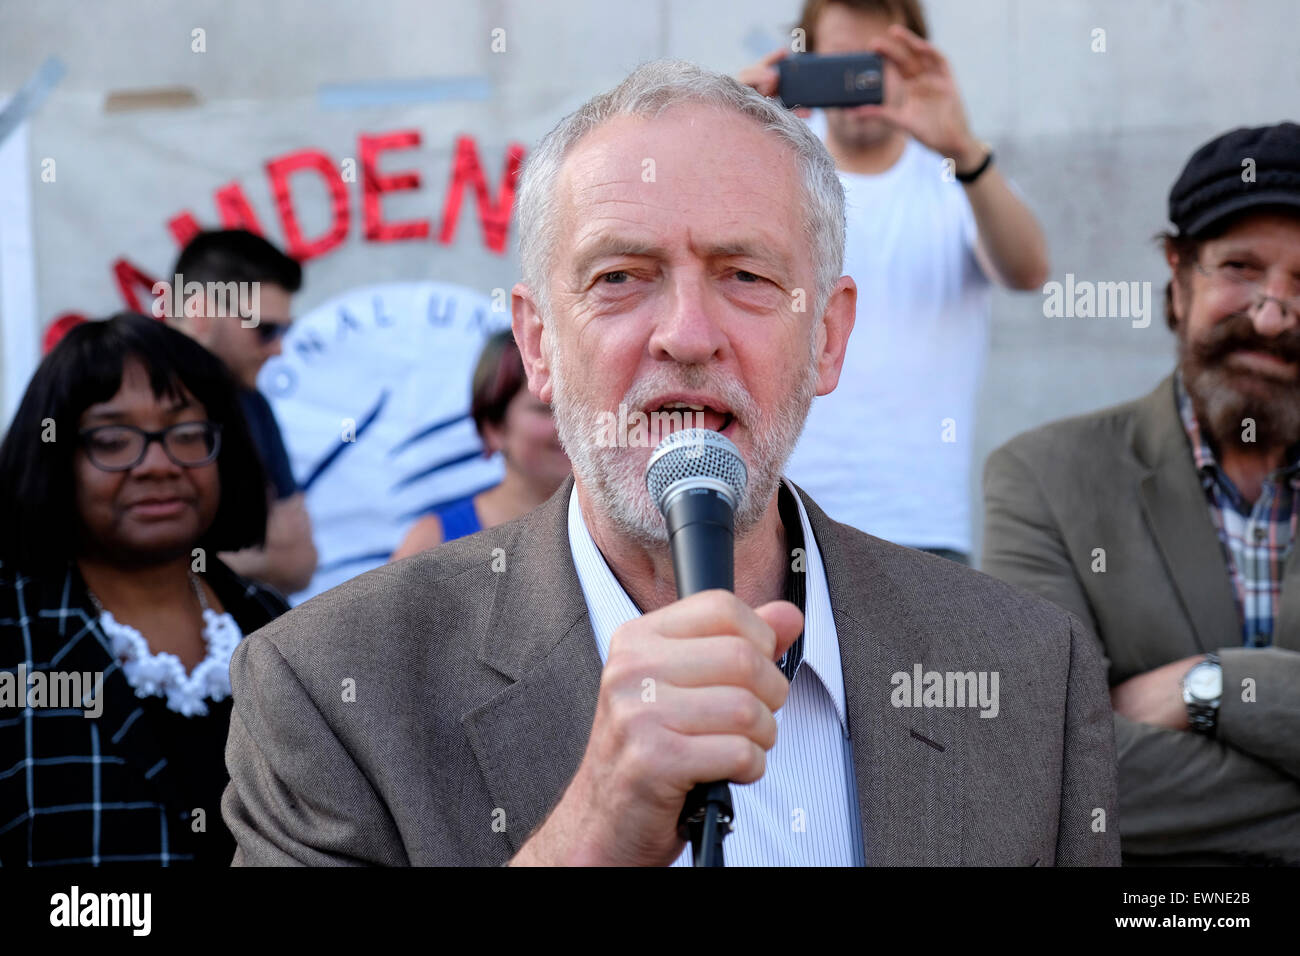 Jeremy Corbyn addresses the crowd in Trafalgar Square Stock Photo